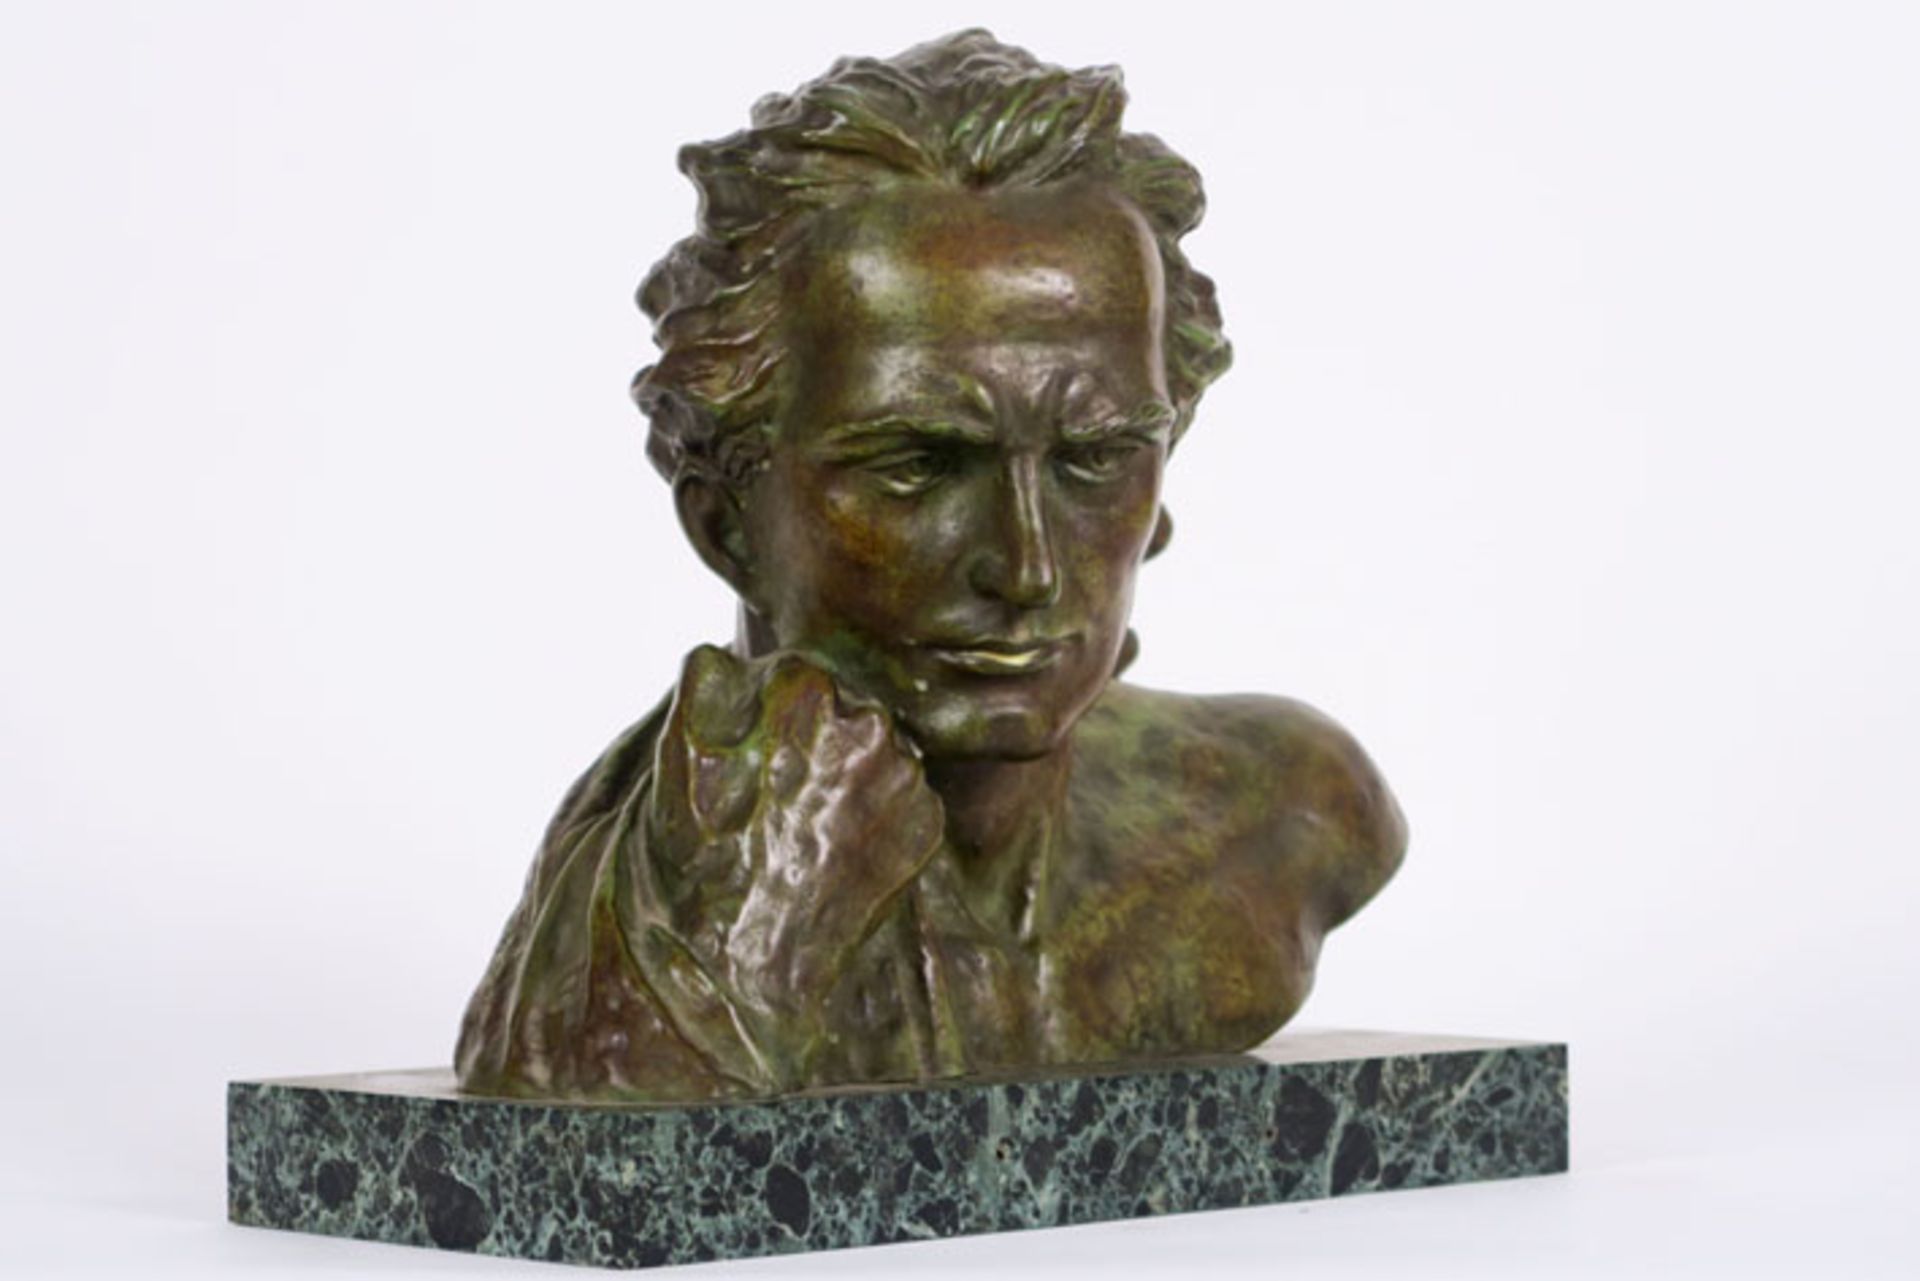 20th Cent. Belgian sculpture in bronze on marble base - signed Jan Martel - - [...] - Image 2 of 5